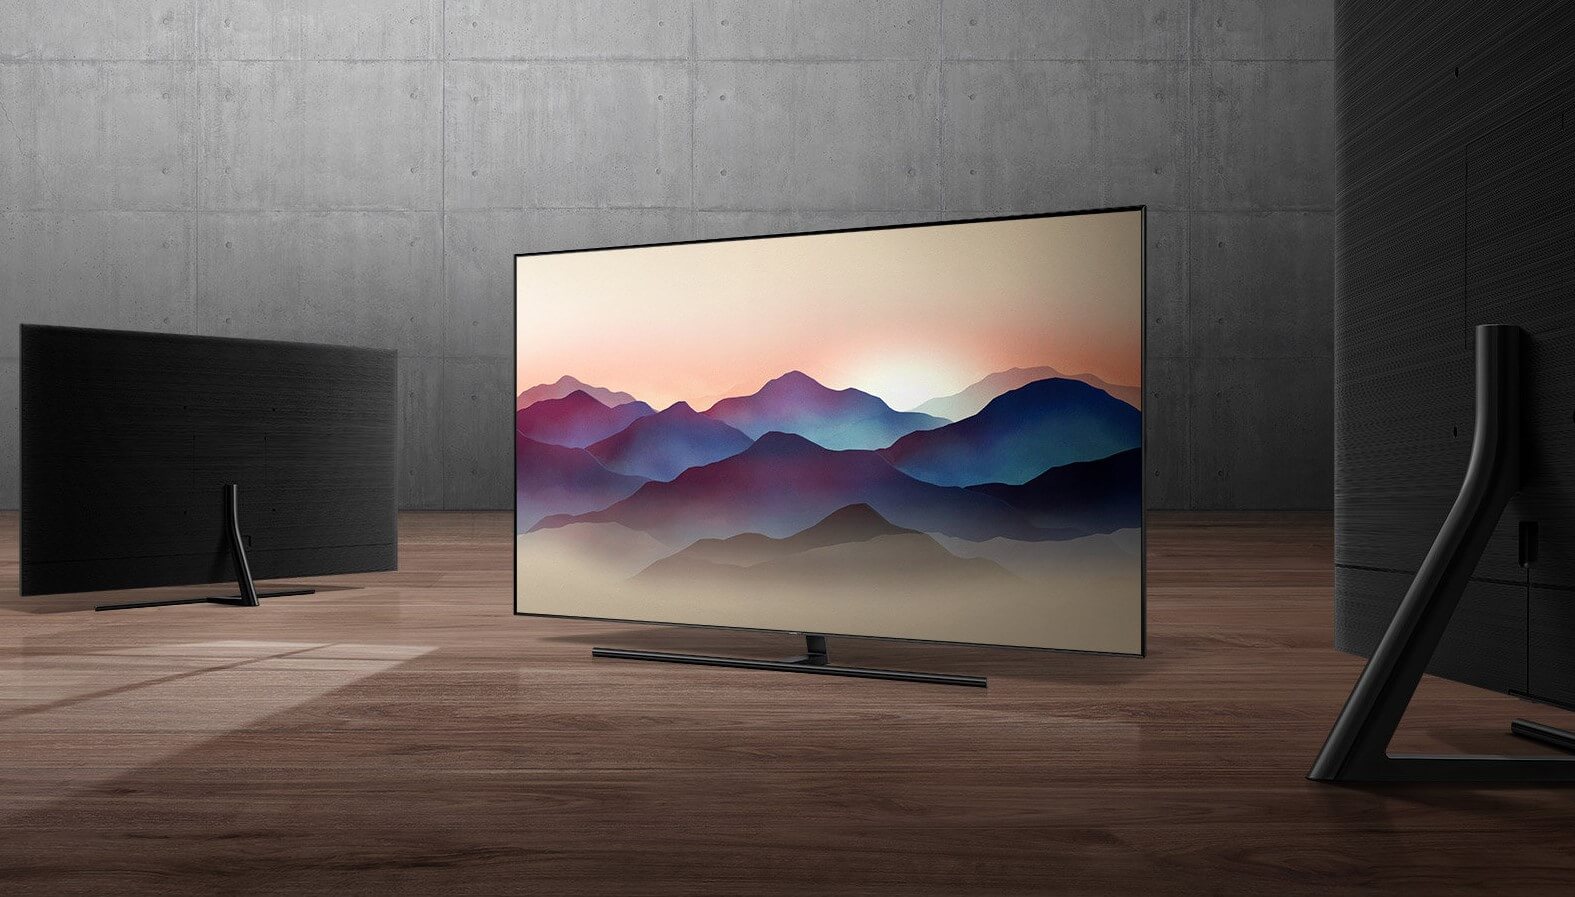 قیمت جدید تلویزیون ۴۳ اینچ چند؟ (جدول)